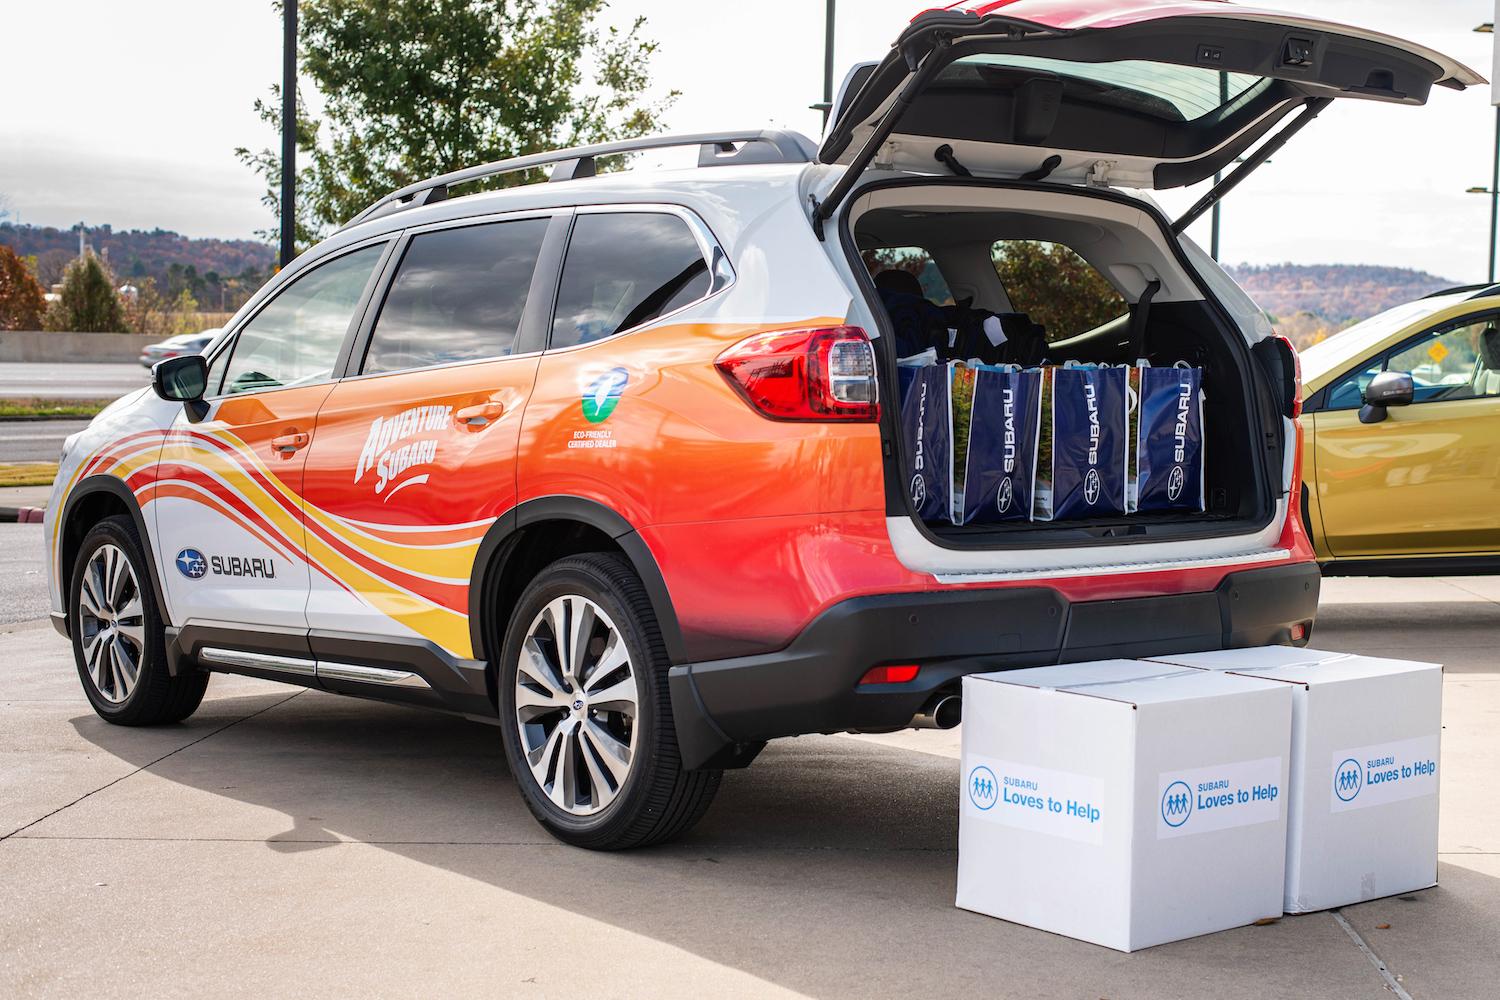 Adventure Subaru Car - Subaru Donating to Local Nonprofits